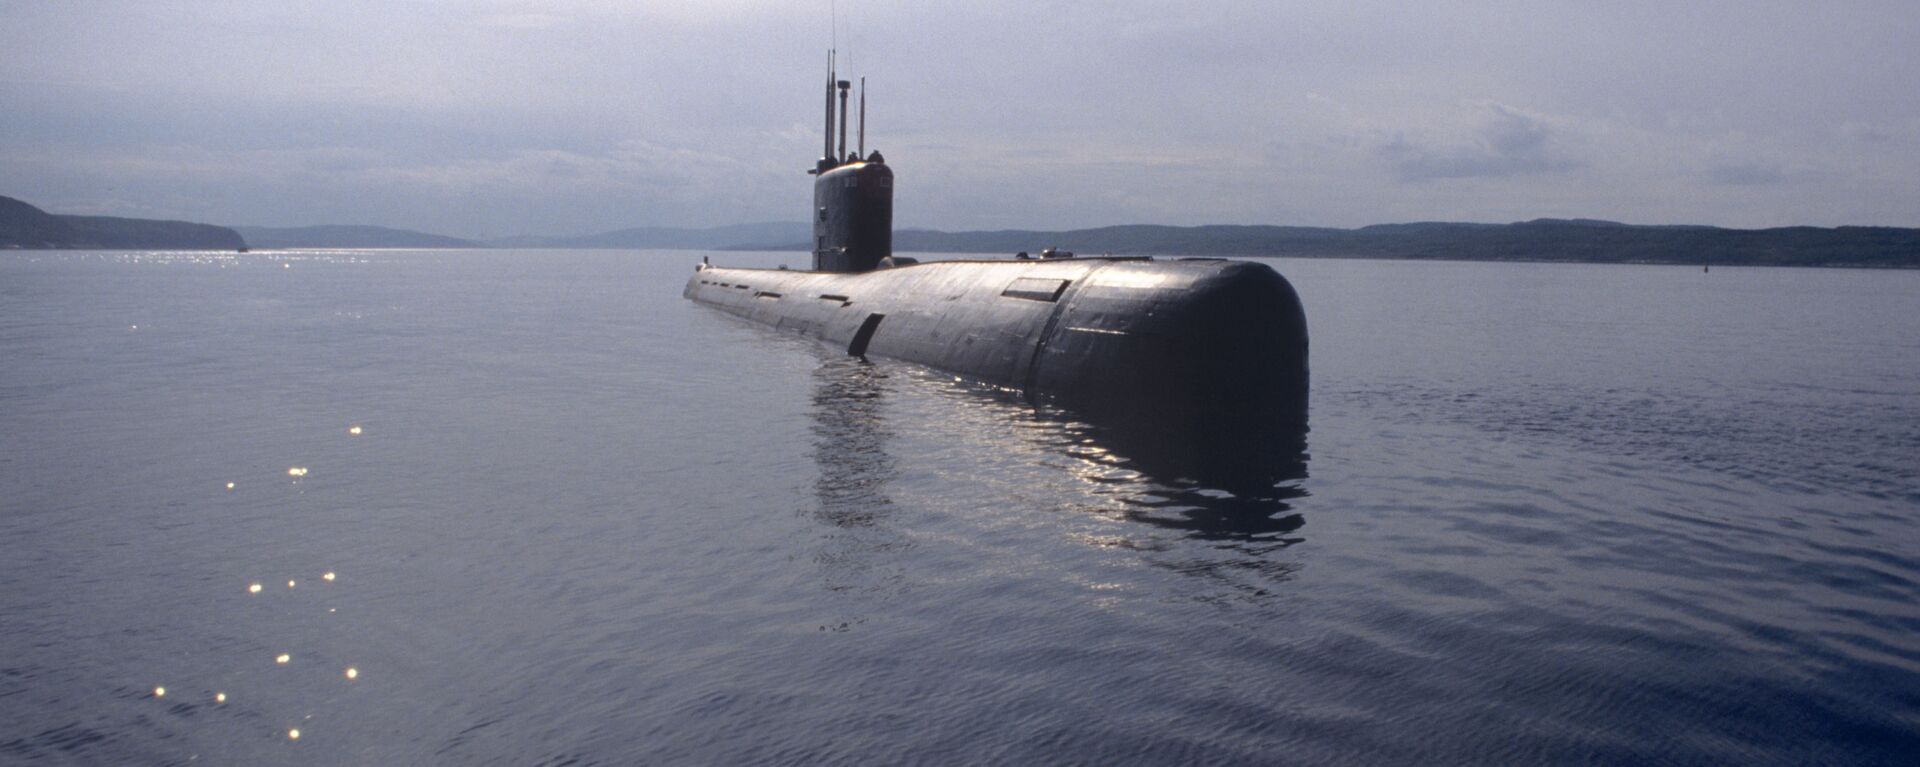 tàu ngầm Varshavyanka của Nga - Sputnik Việt Nam, 1920, 28.03.2021